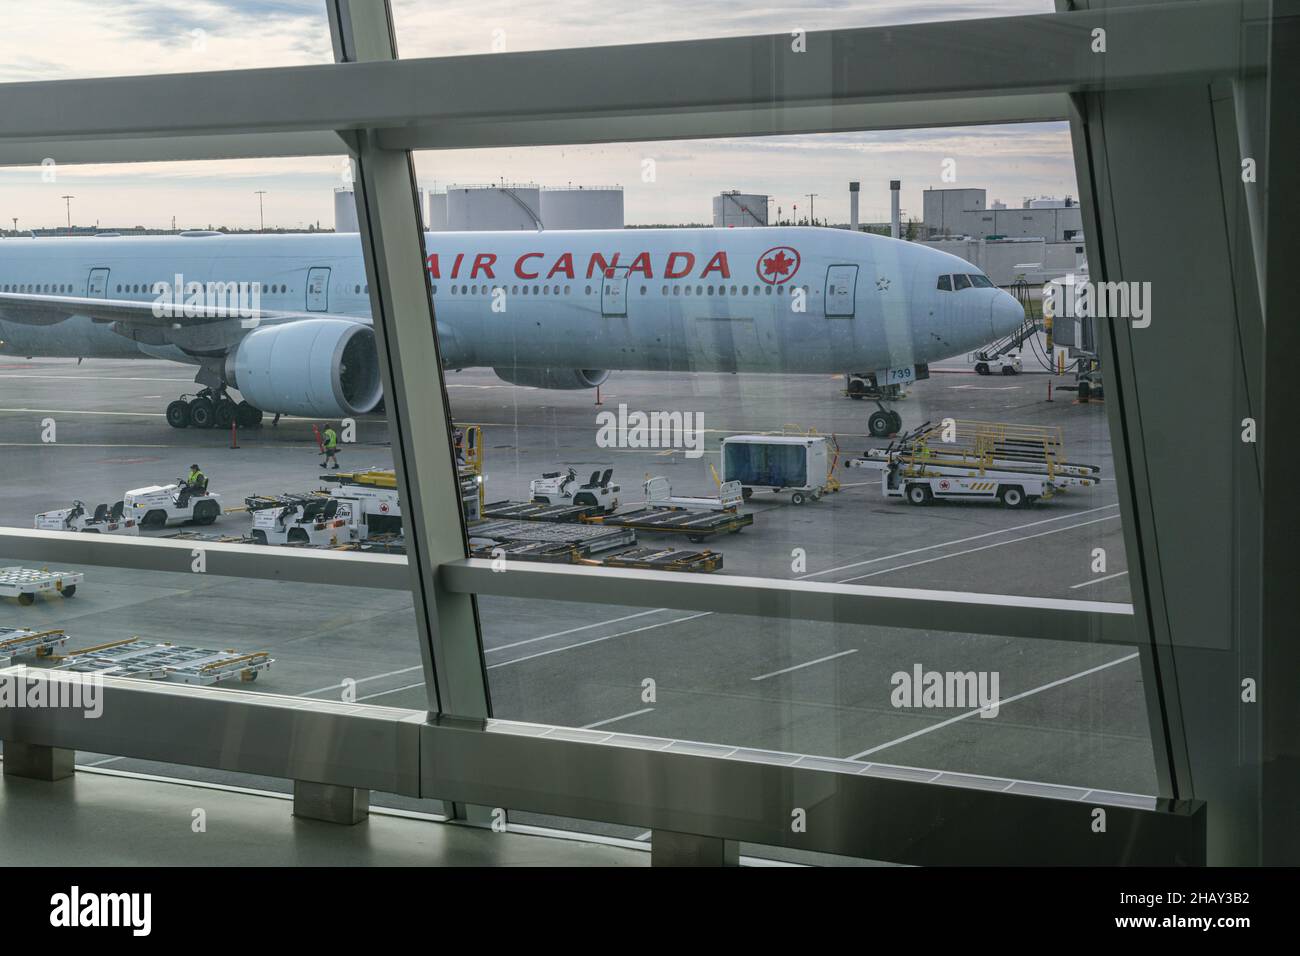 Calgary, Canada - 2 October 2021: Air Canada commercial plane on the tarmac of Calgary International Airport Stock Photo